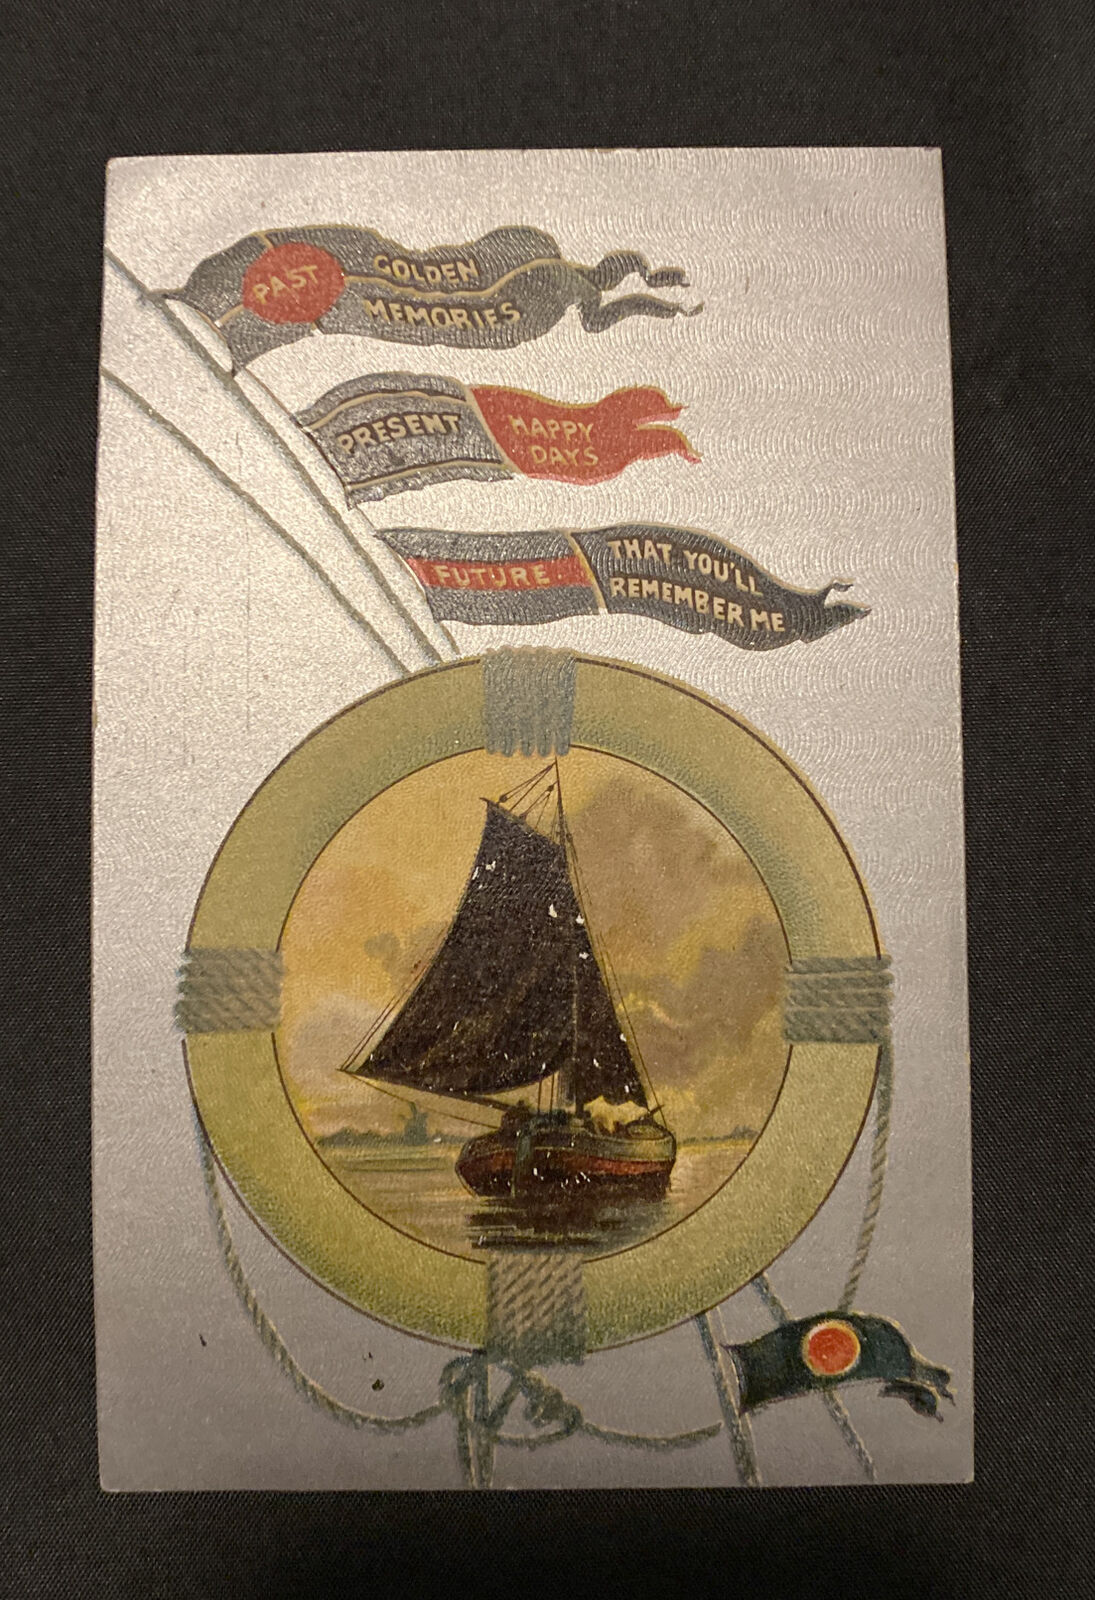 Vintage Postcards Sail Boat Golden Memories Flag Happy Days Used